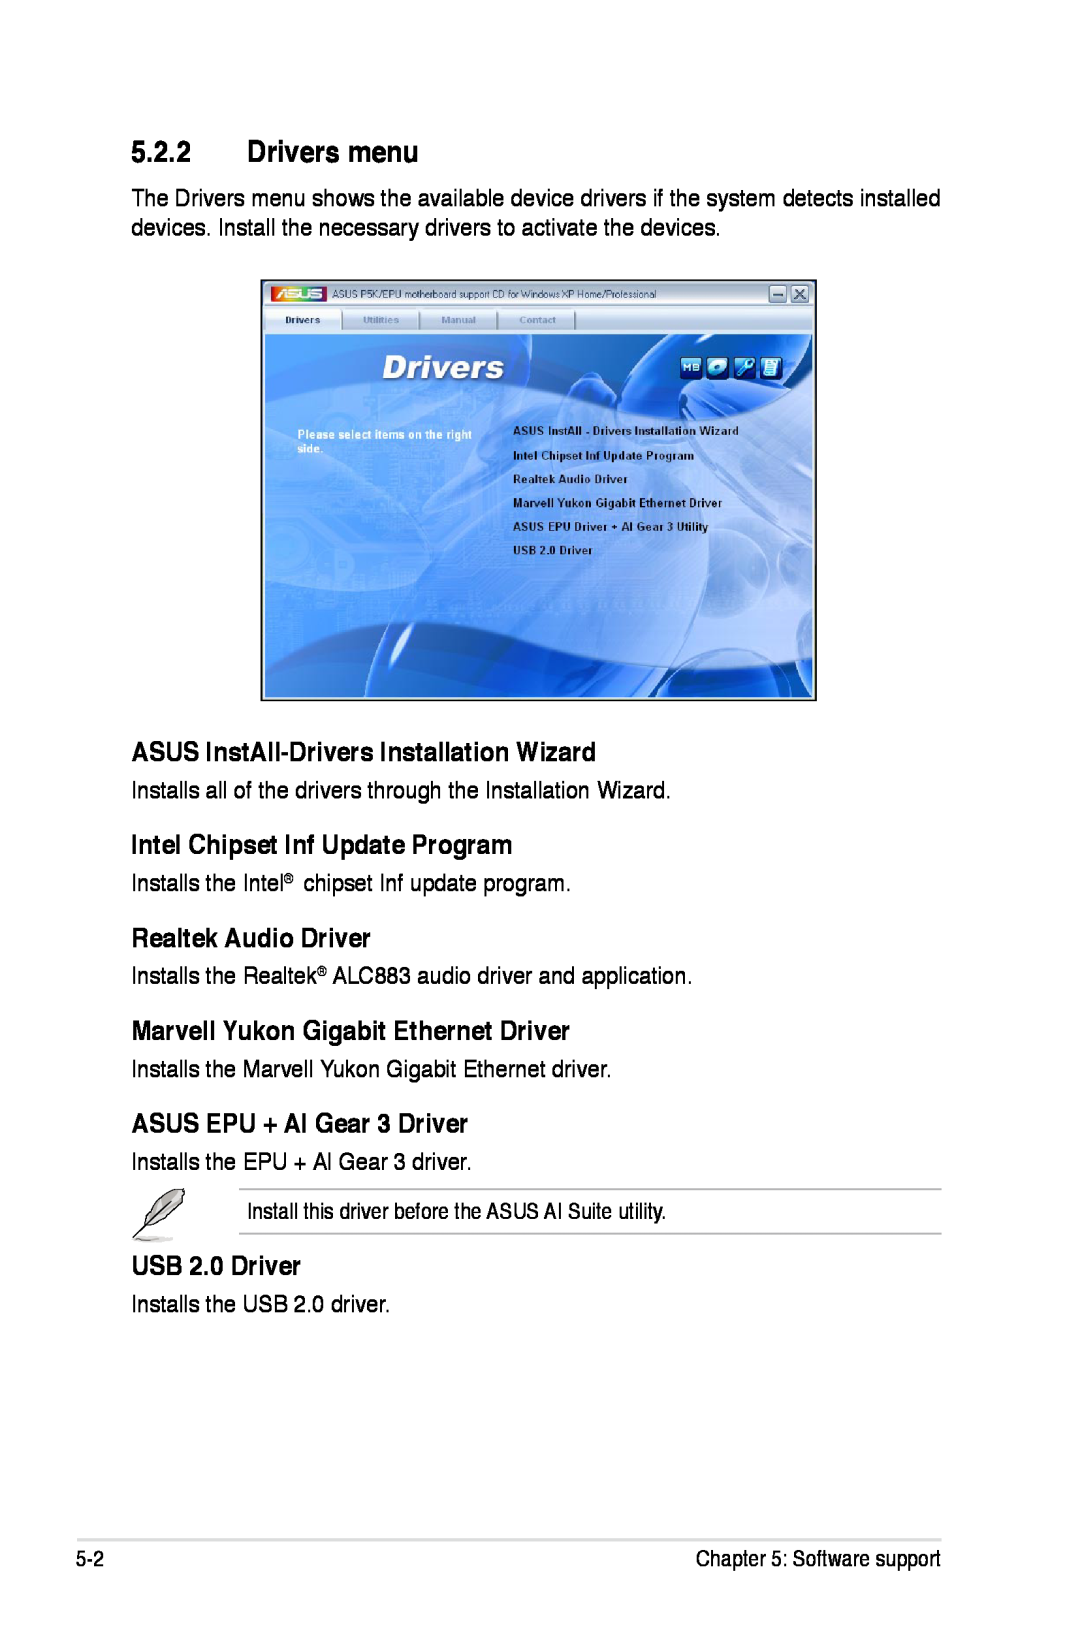 Asus P5K/EPU Drivers menu, ASUS InstAll-Drivers Installation Wizard, Intel Chipset Inf Update Program, USB 2.0 Driver 